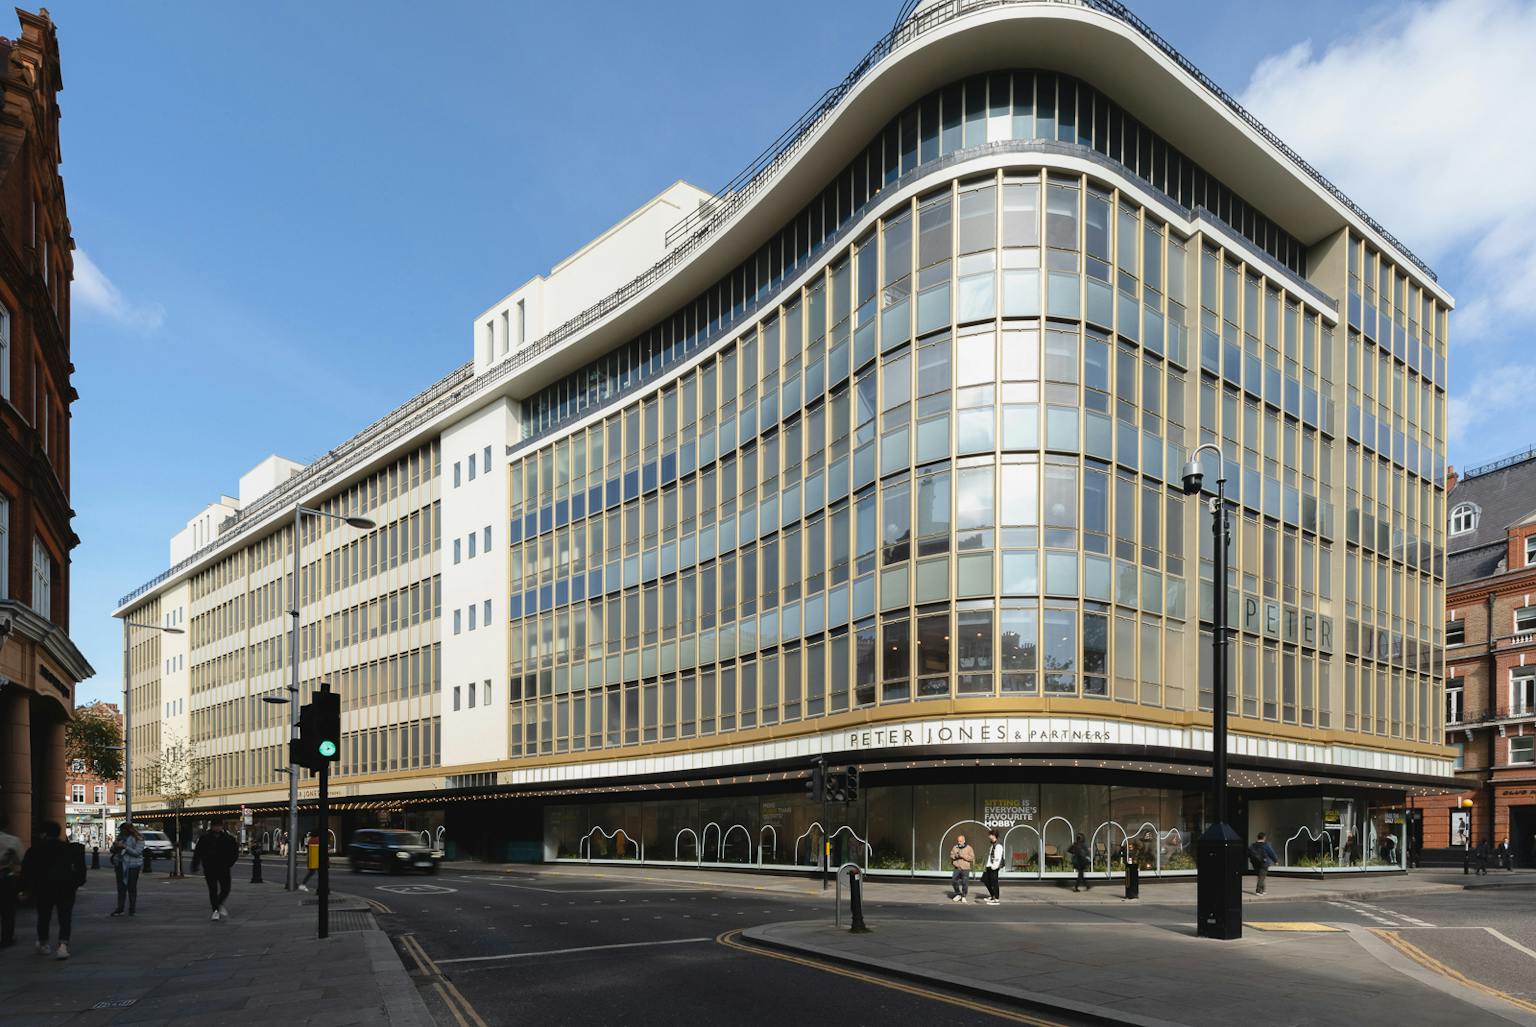 The repaired and enhanced façade of Peter Jones Department Store, London